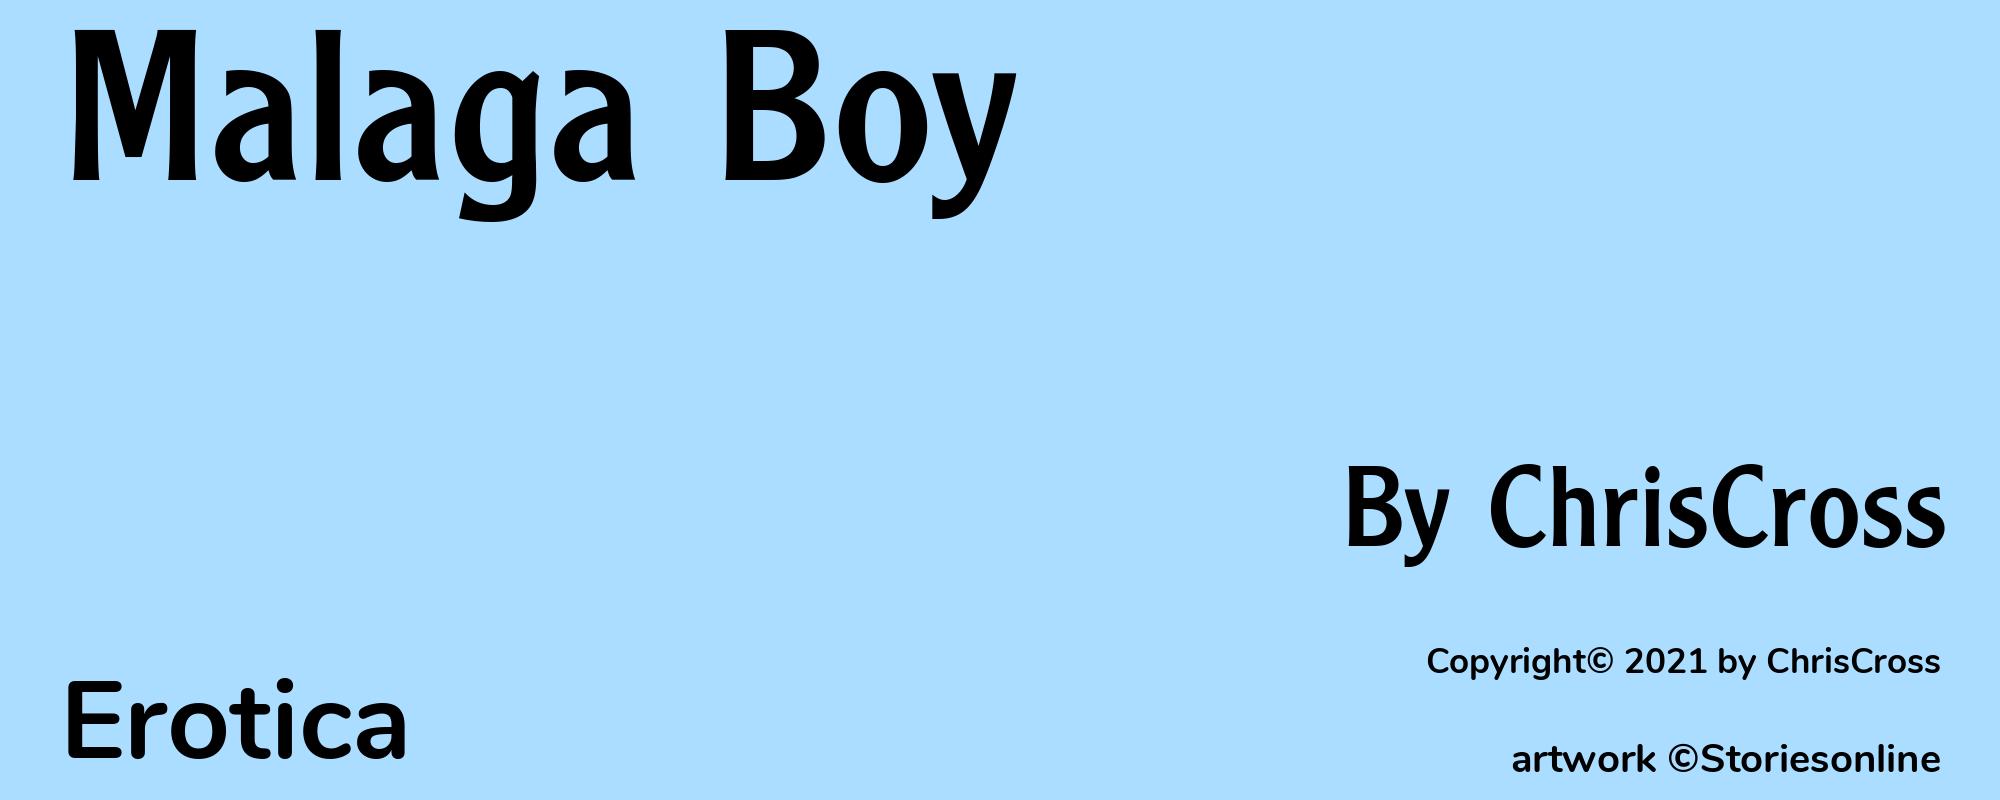 Malaga Boy - Cover